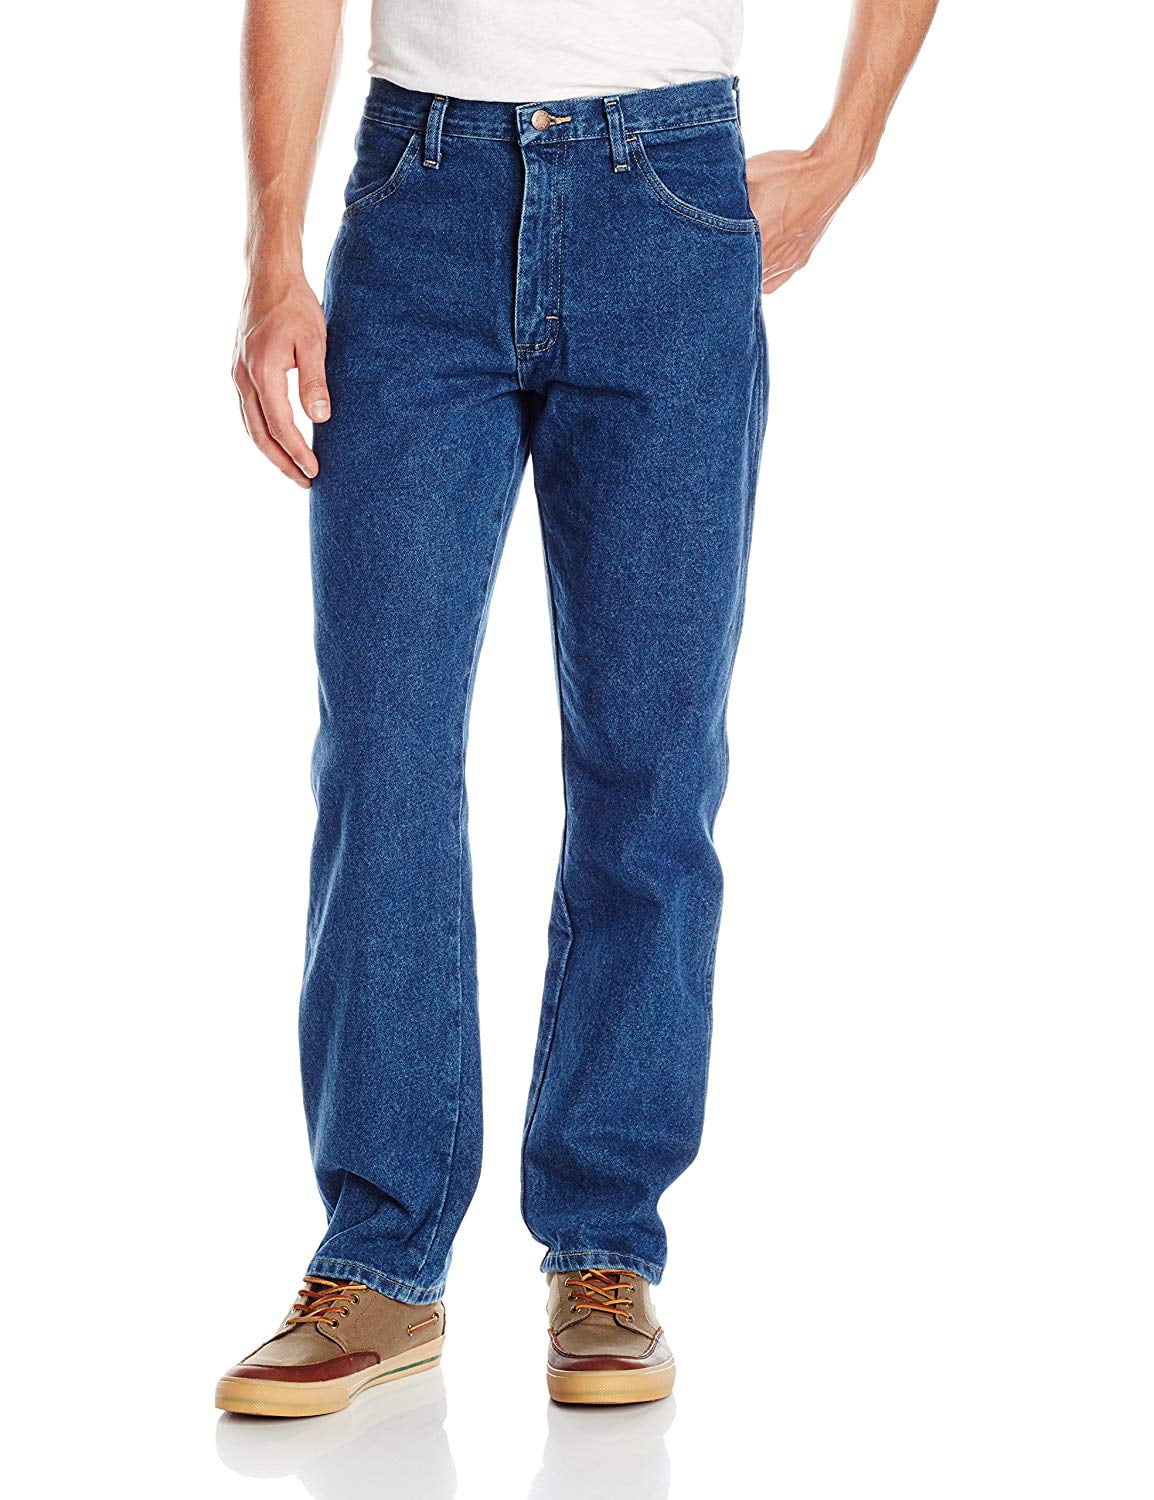 maverick jeans company